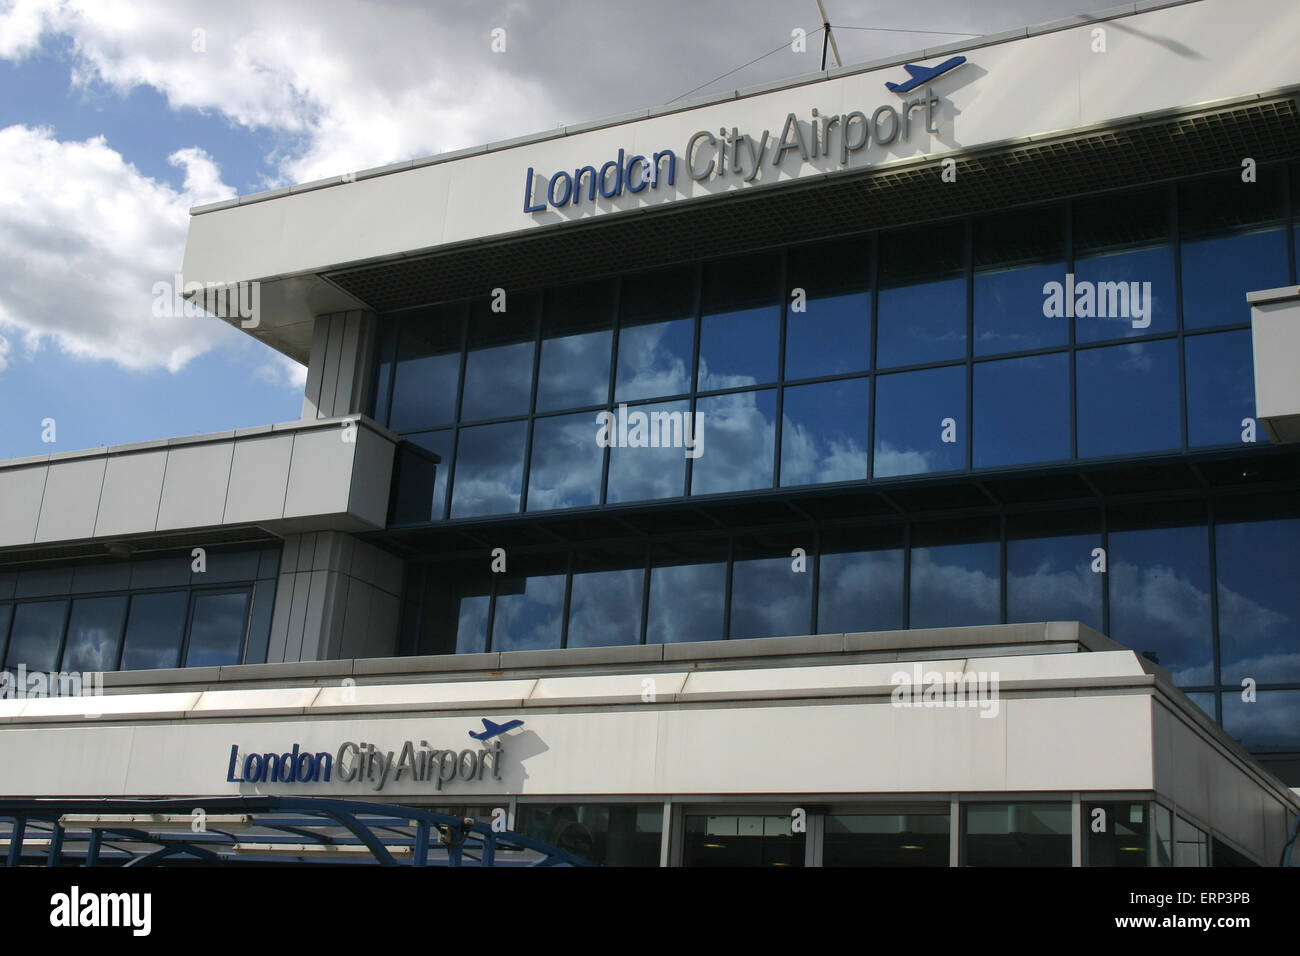 LONDON CITY AIRPORT Stock Photo